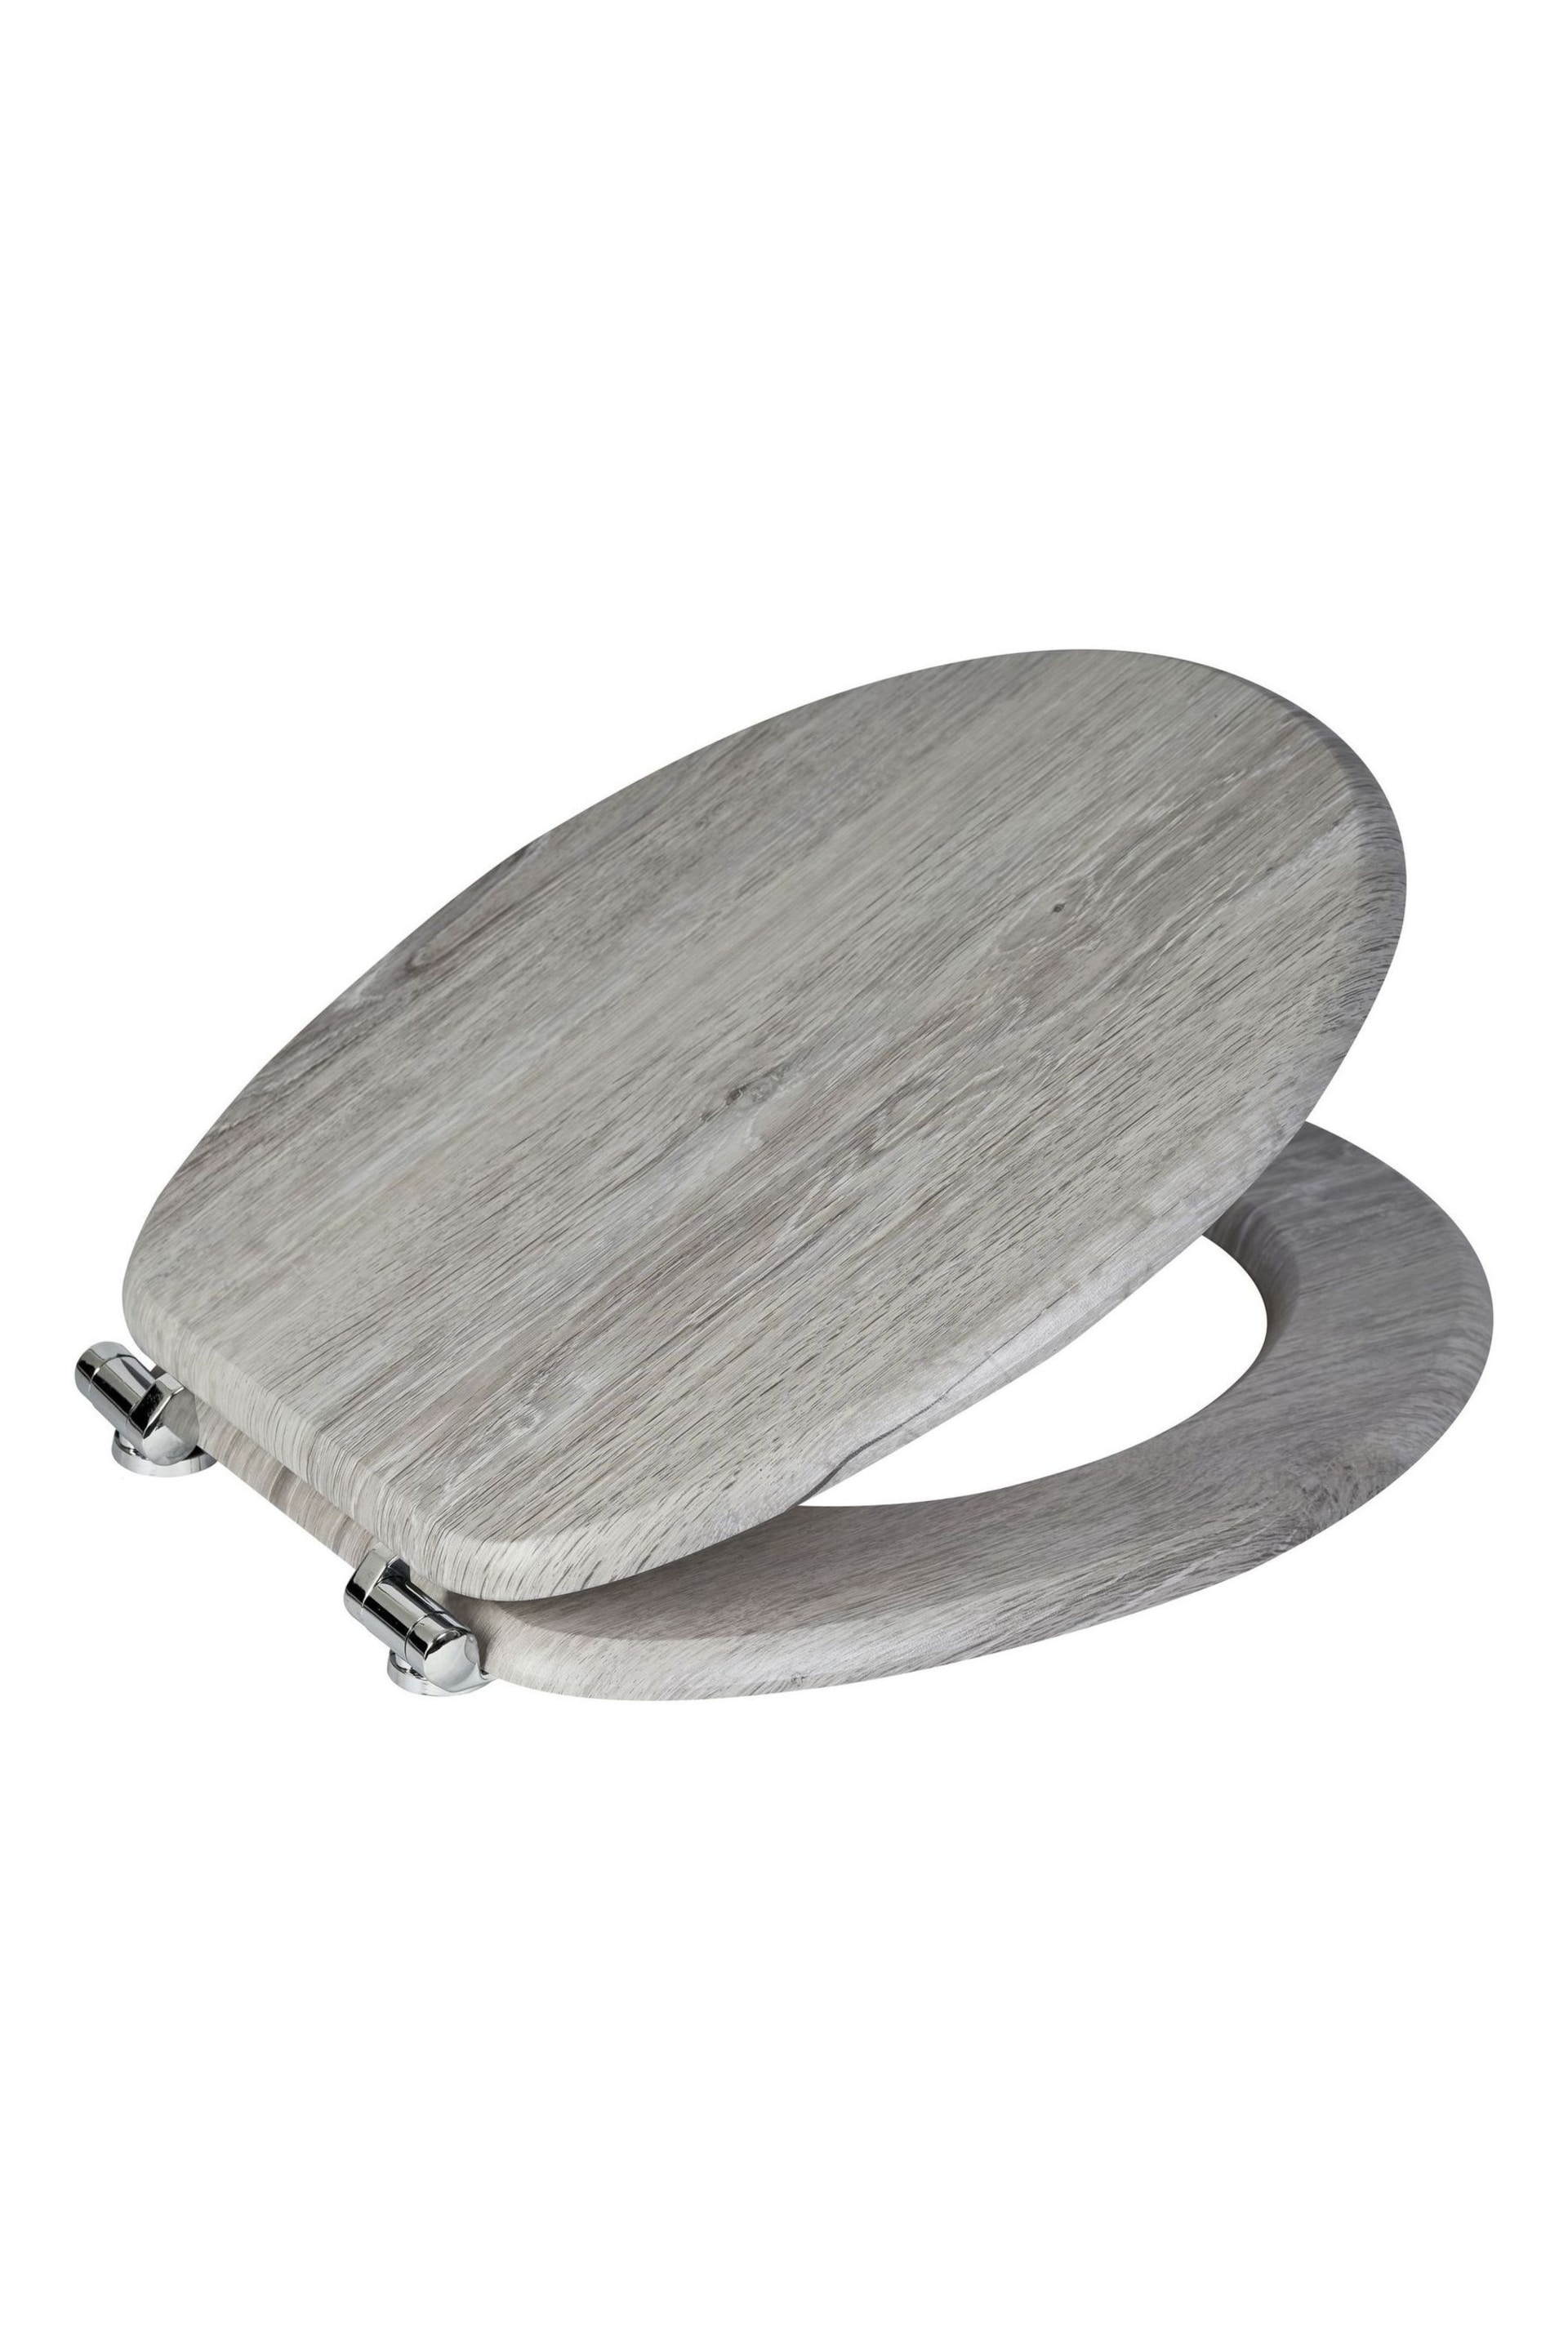 Showerdrape Grey Oak Norfolk Soft Close Wooden Toilet Seat - Image 1 of 2